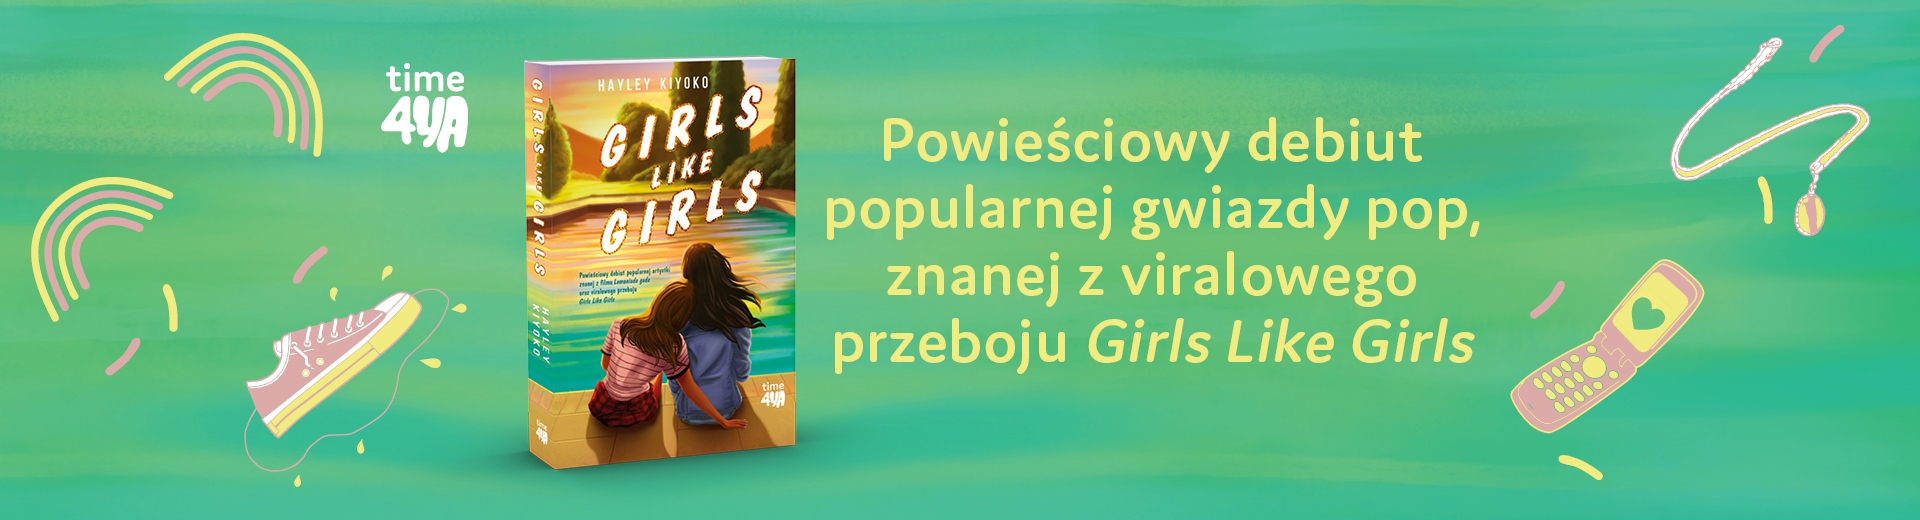 banner promujący książkę girls like girls